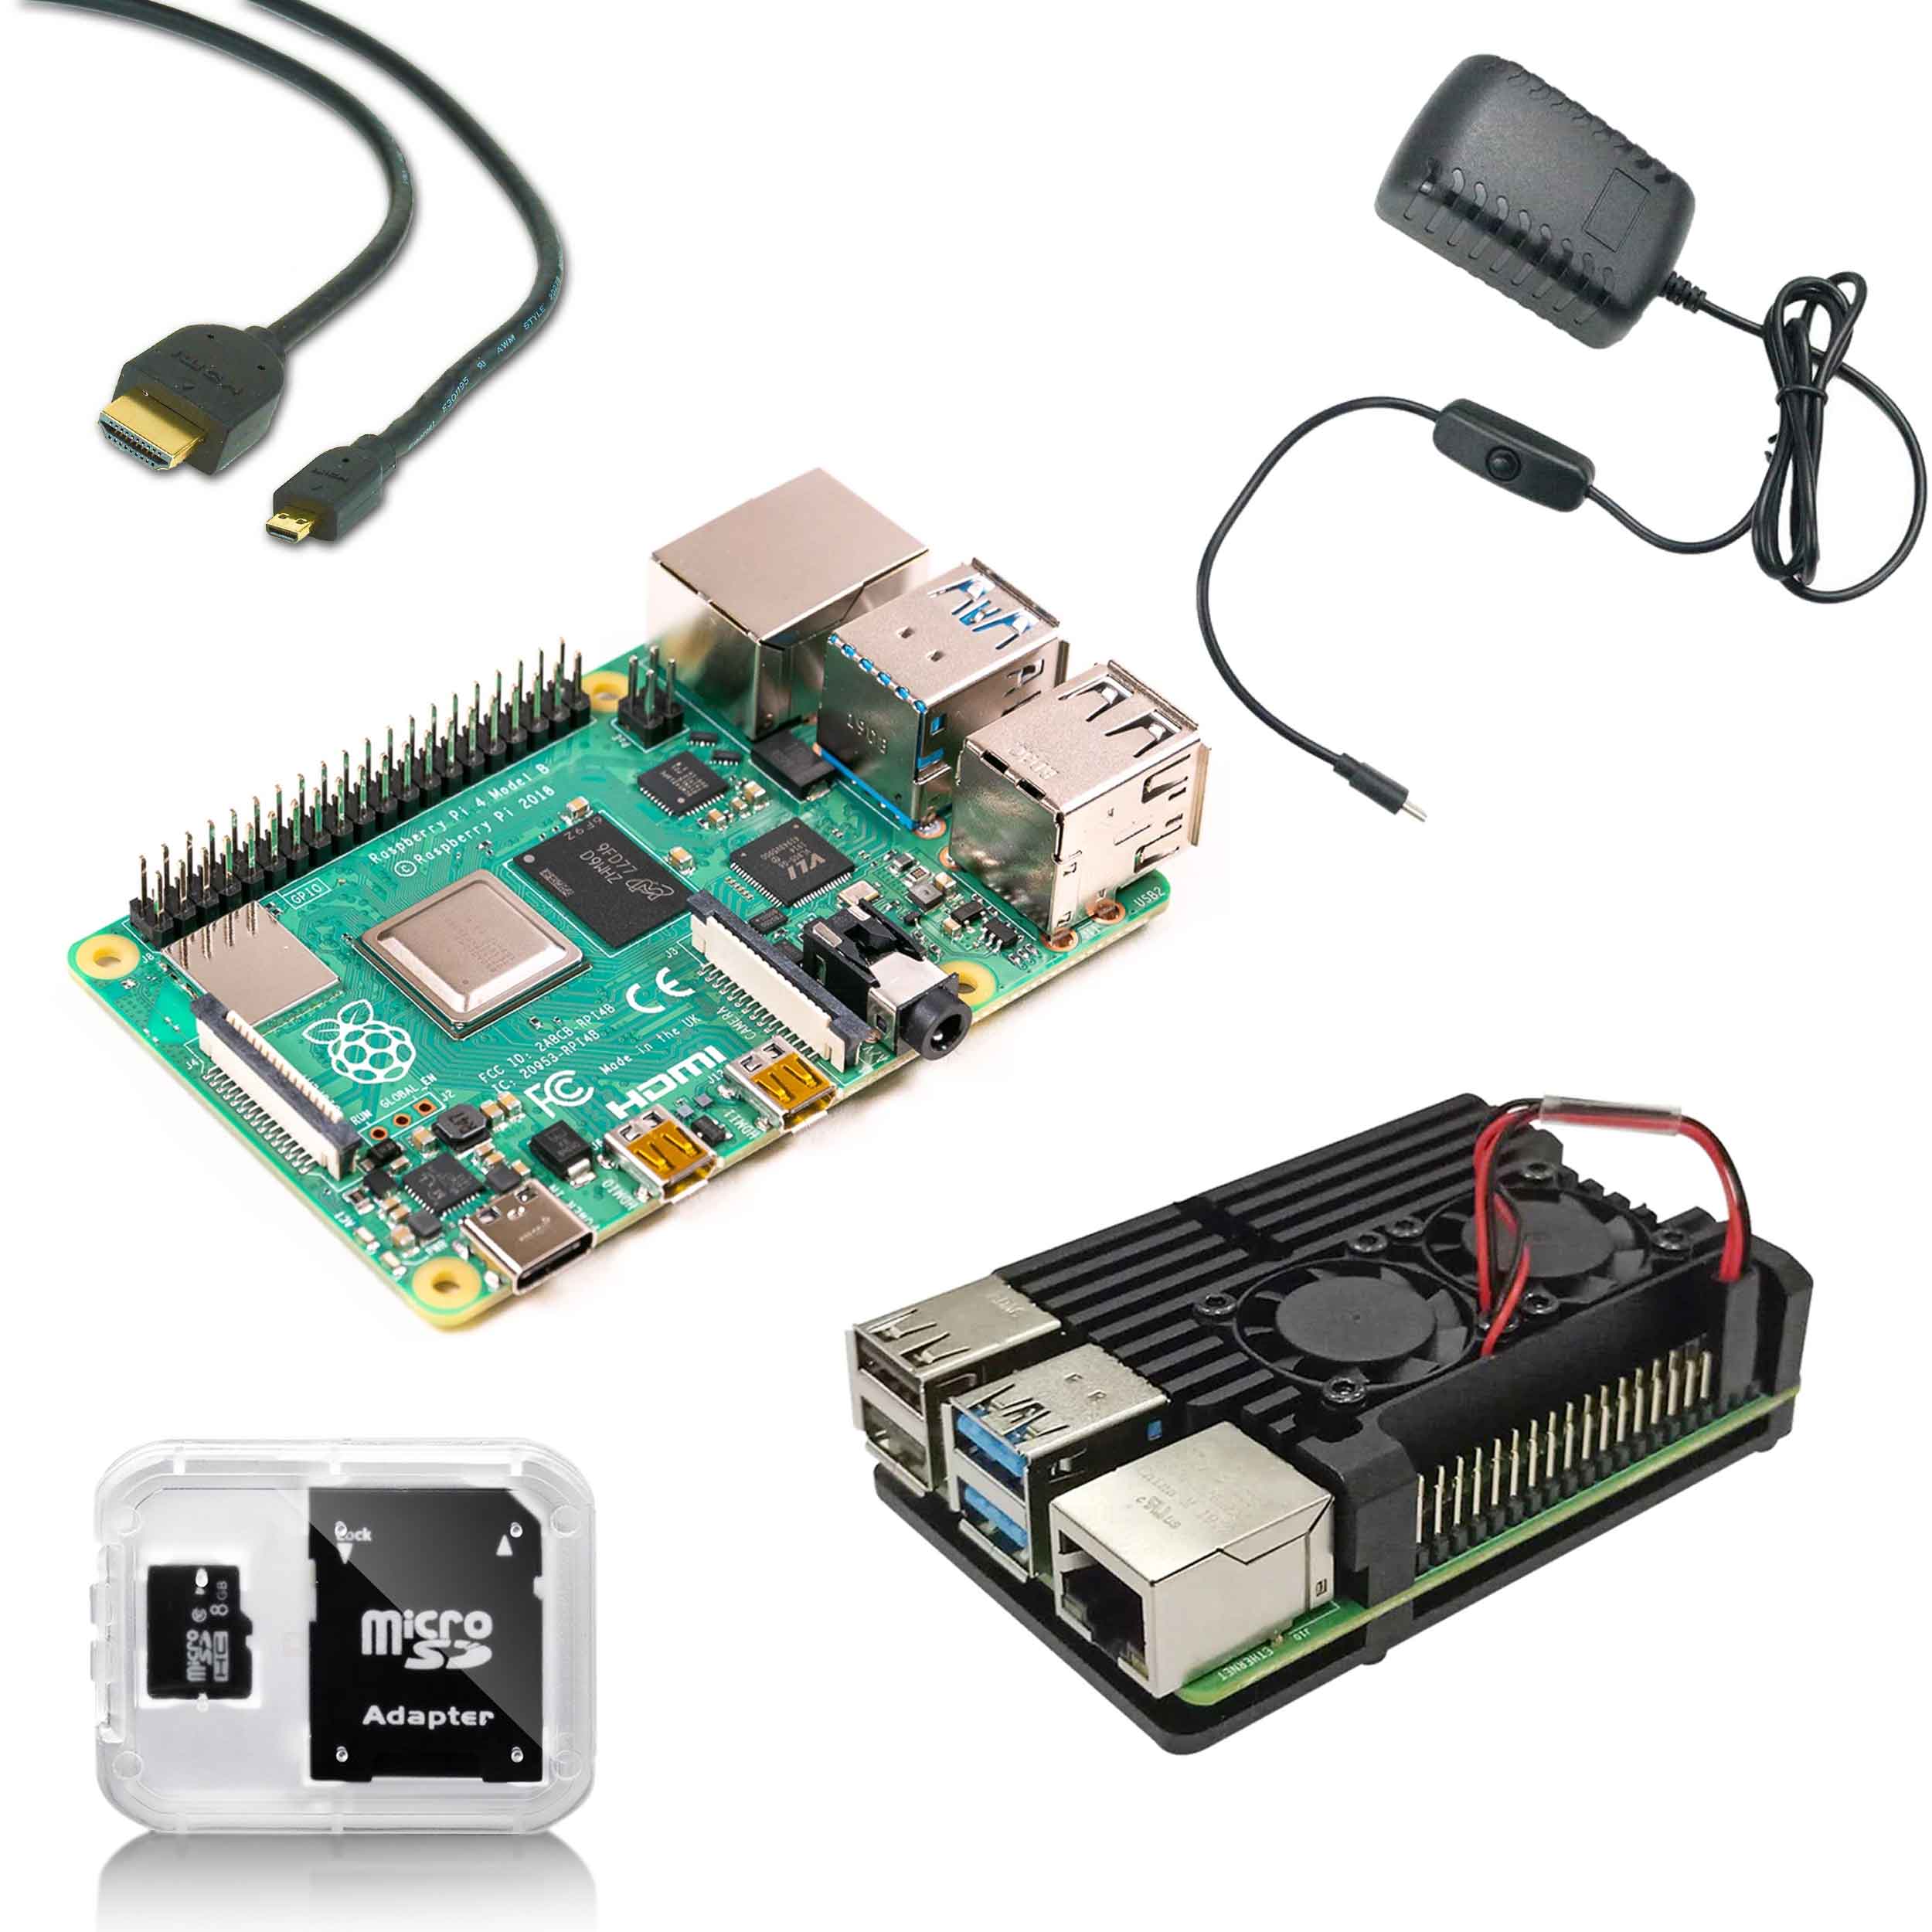 Raspberry Pi 4 Starter kit with Display